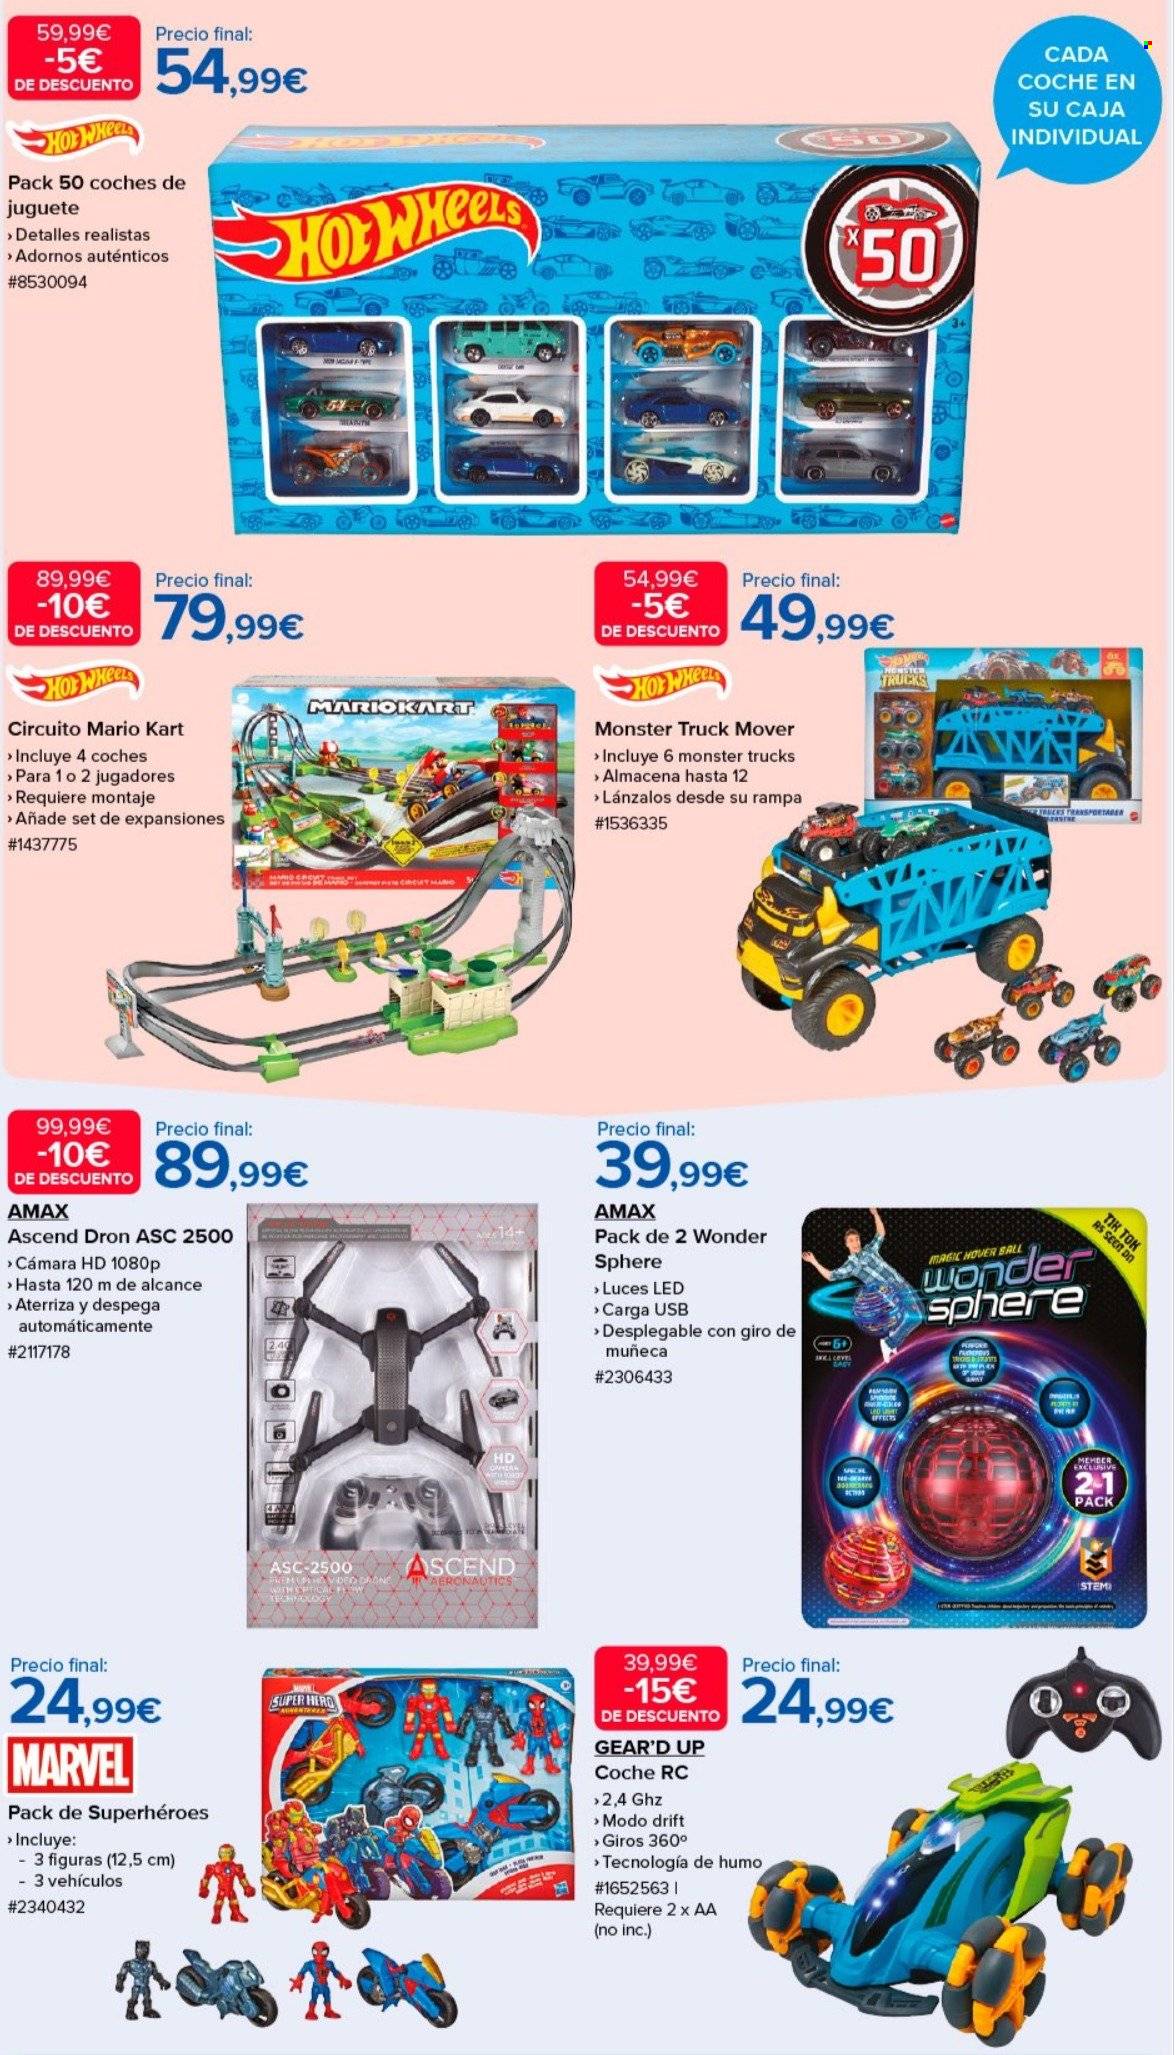 thumbnail - Folleto actual Costco - 29/11/22 - 11/12/22 - Ventas - Marvel, drone, adorno, coche, Hot Wheels, juguete, Monster Truck. Página 3.